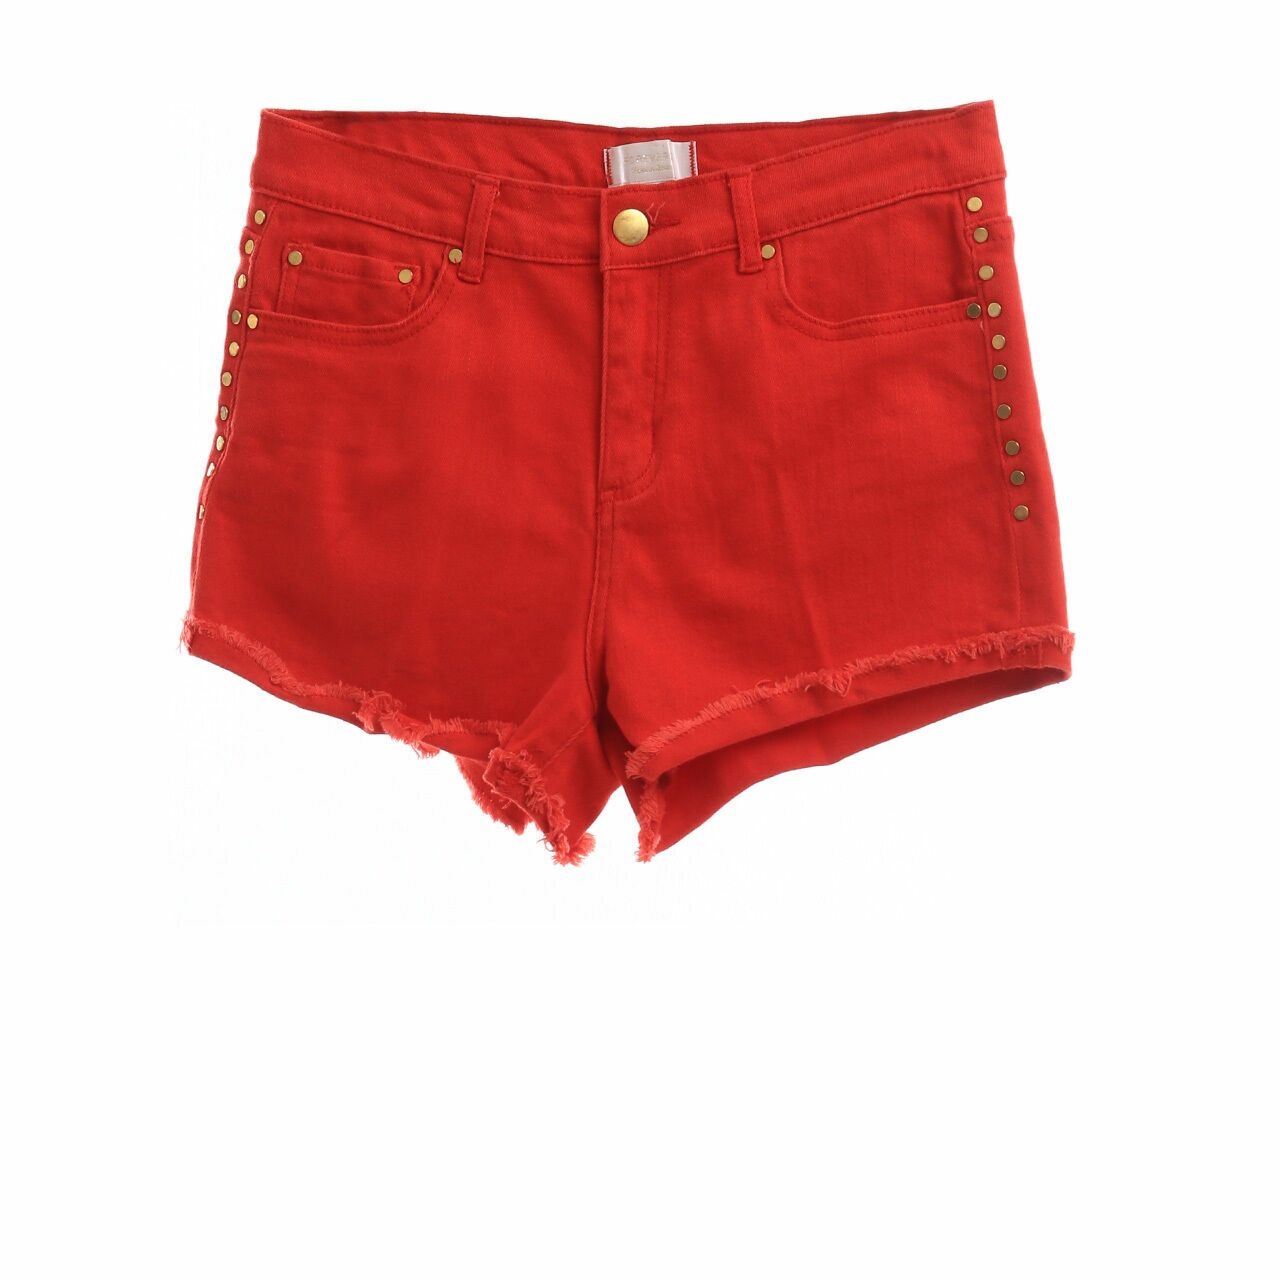 Forever 21 Red Studded Unfinished Short Pants